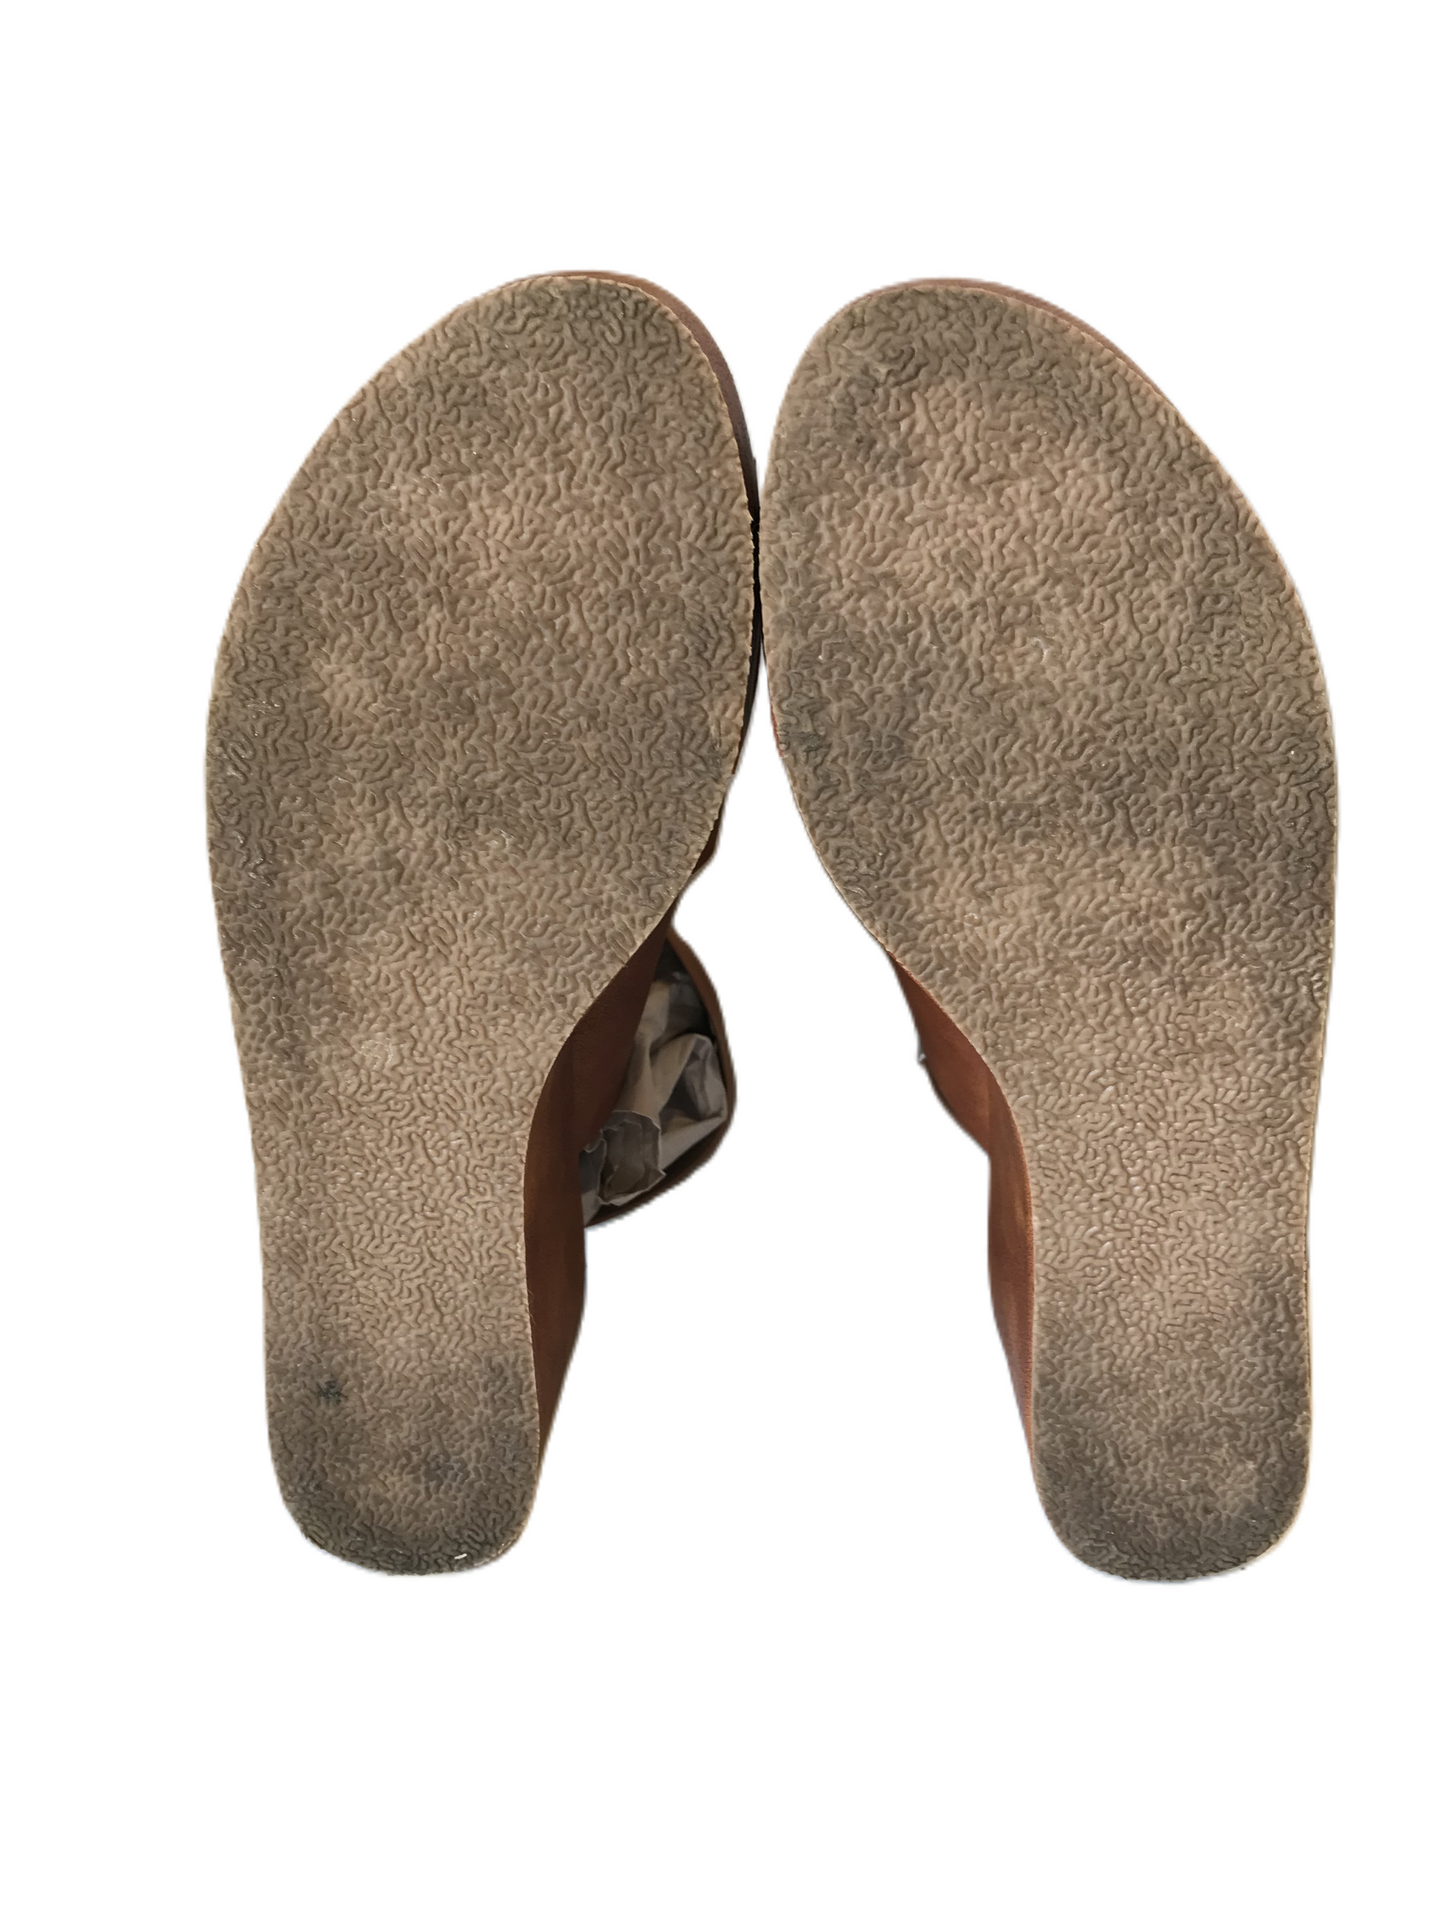 Sandals Heels Platform By Corkys  Size: 10